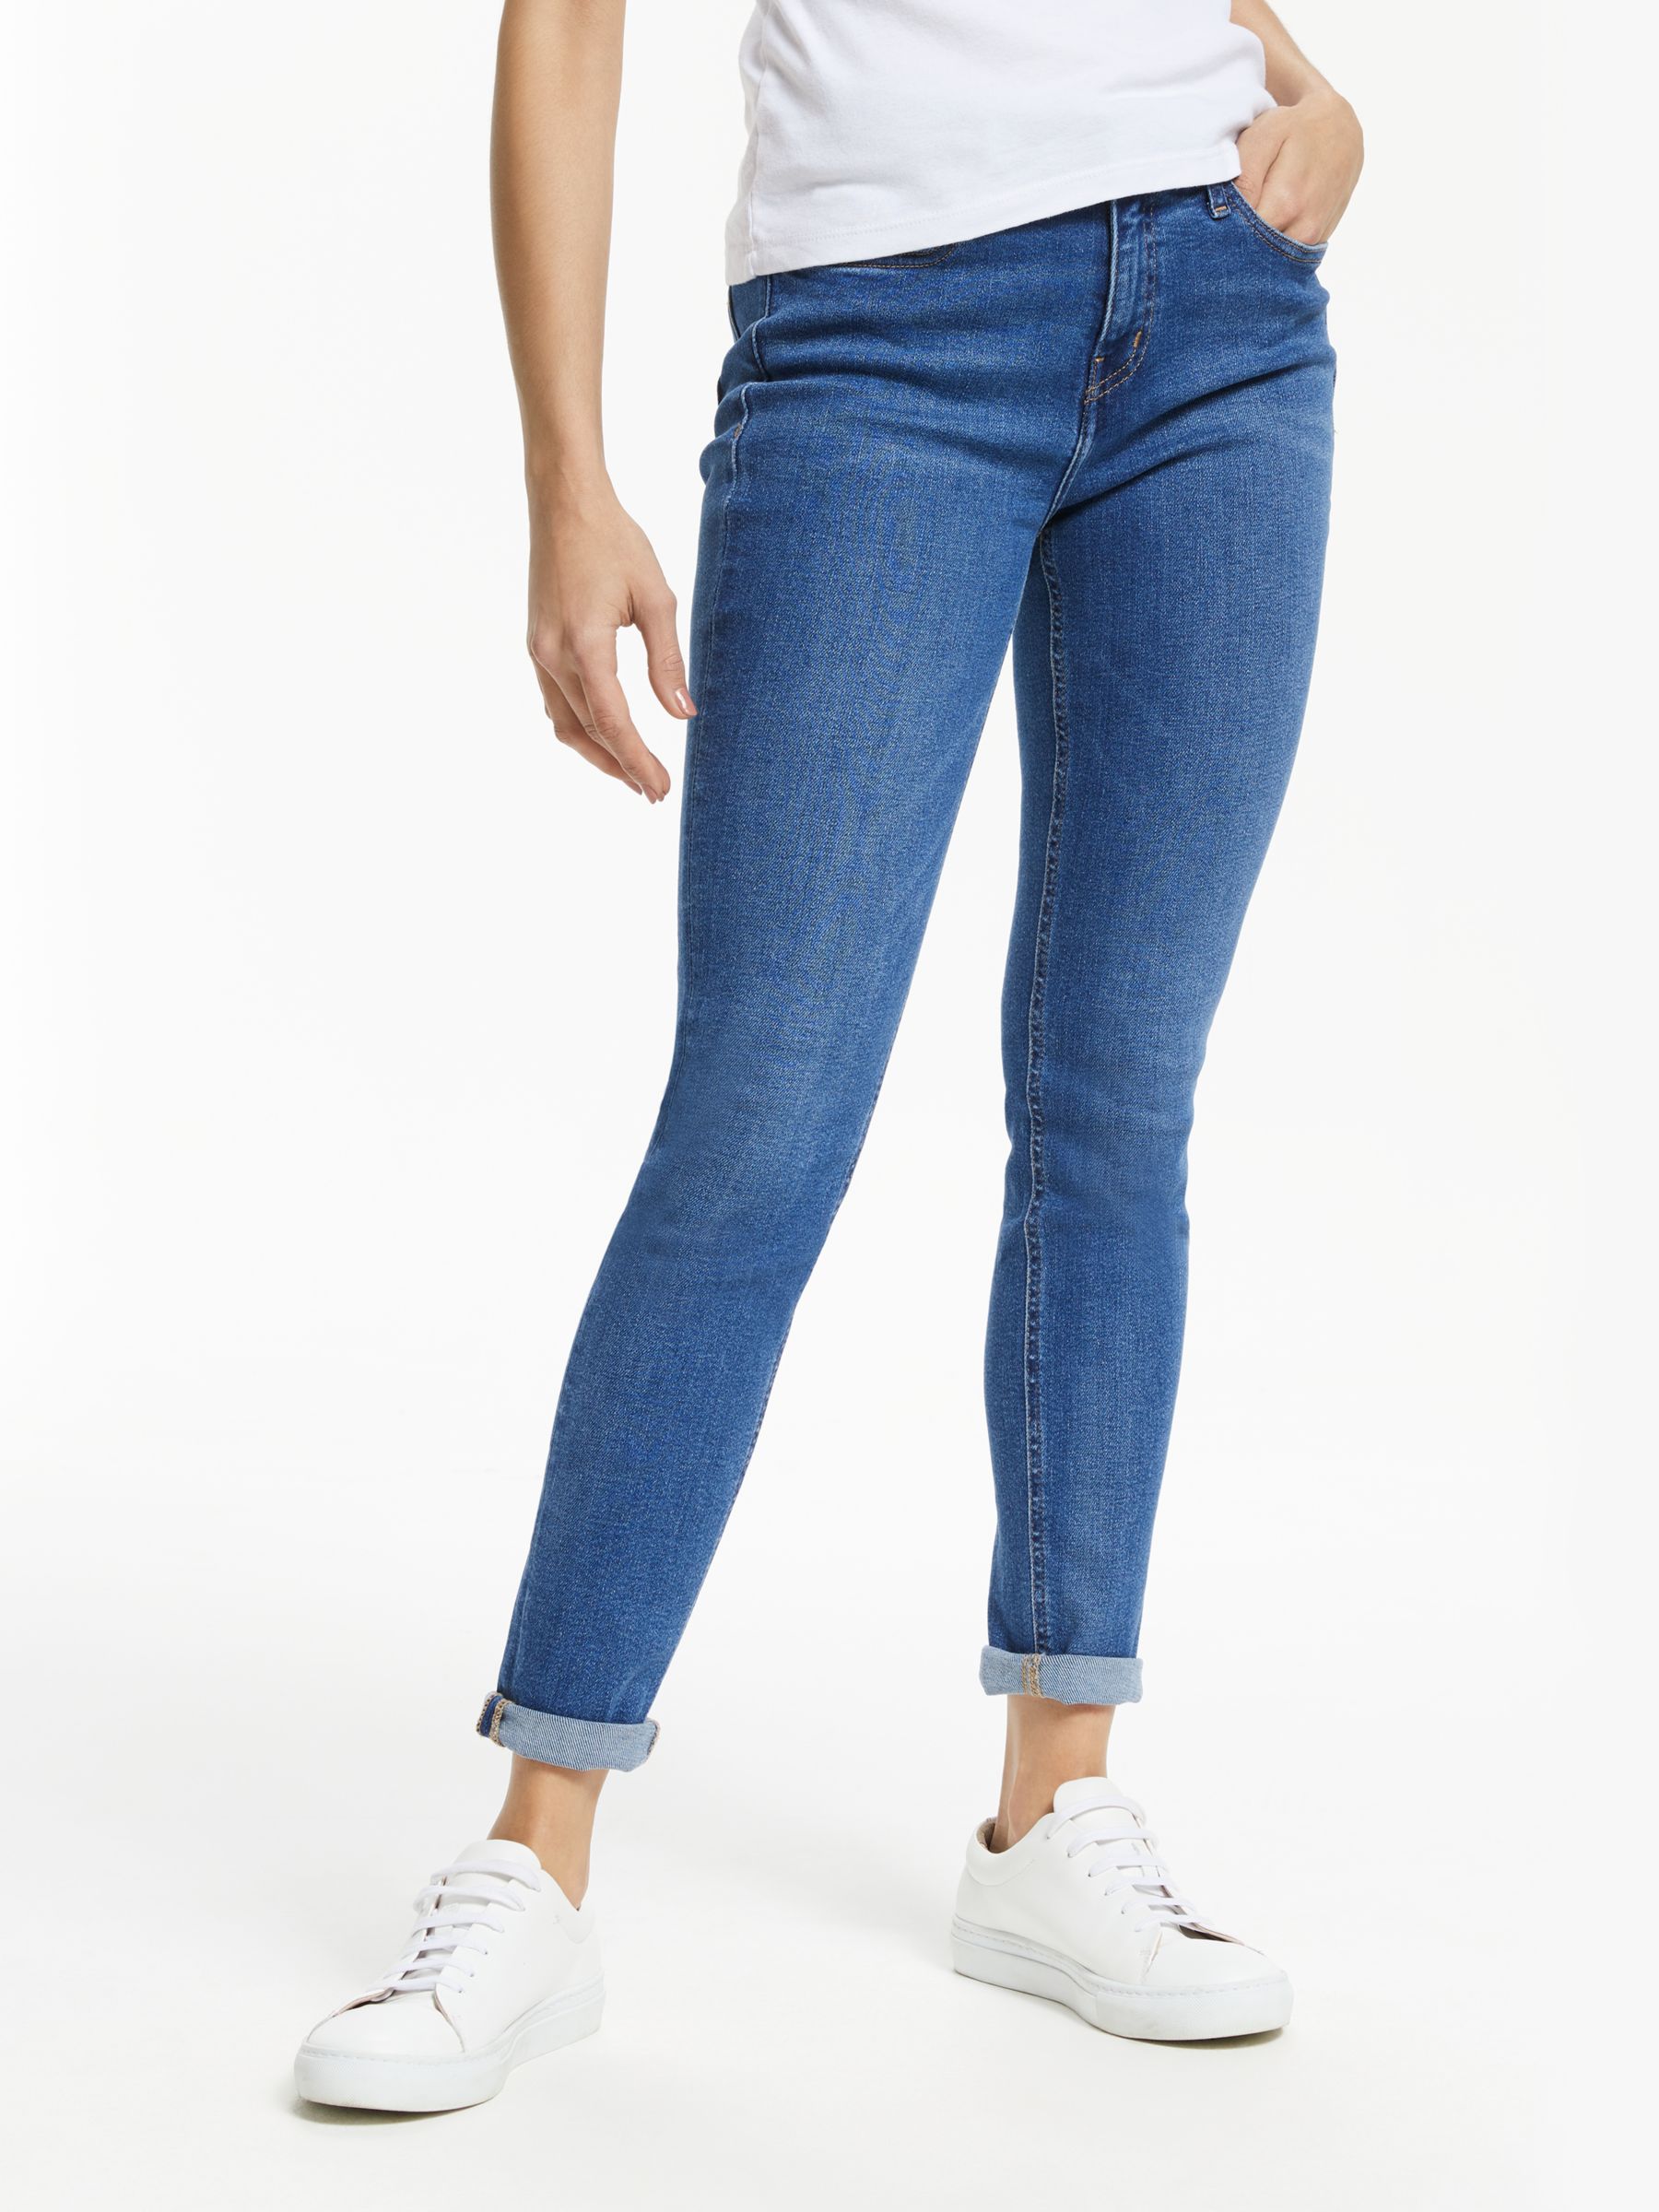 calvin klein low rise skinny jeans